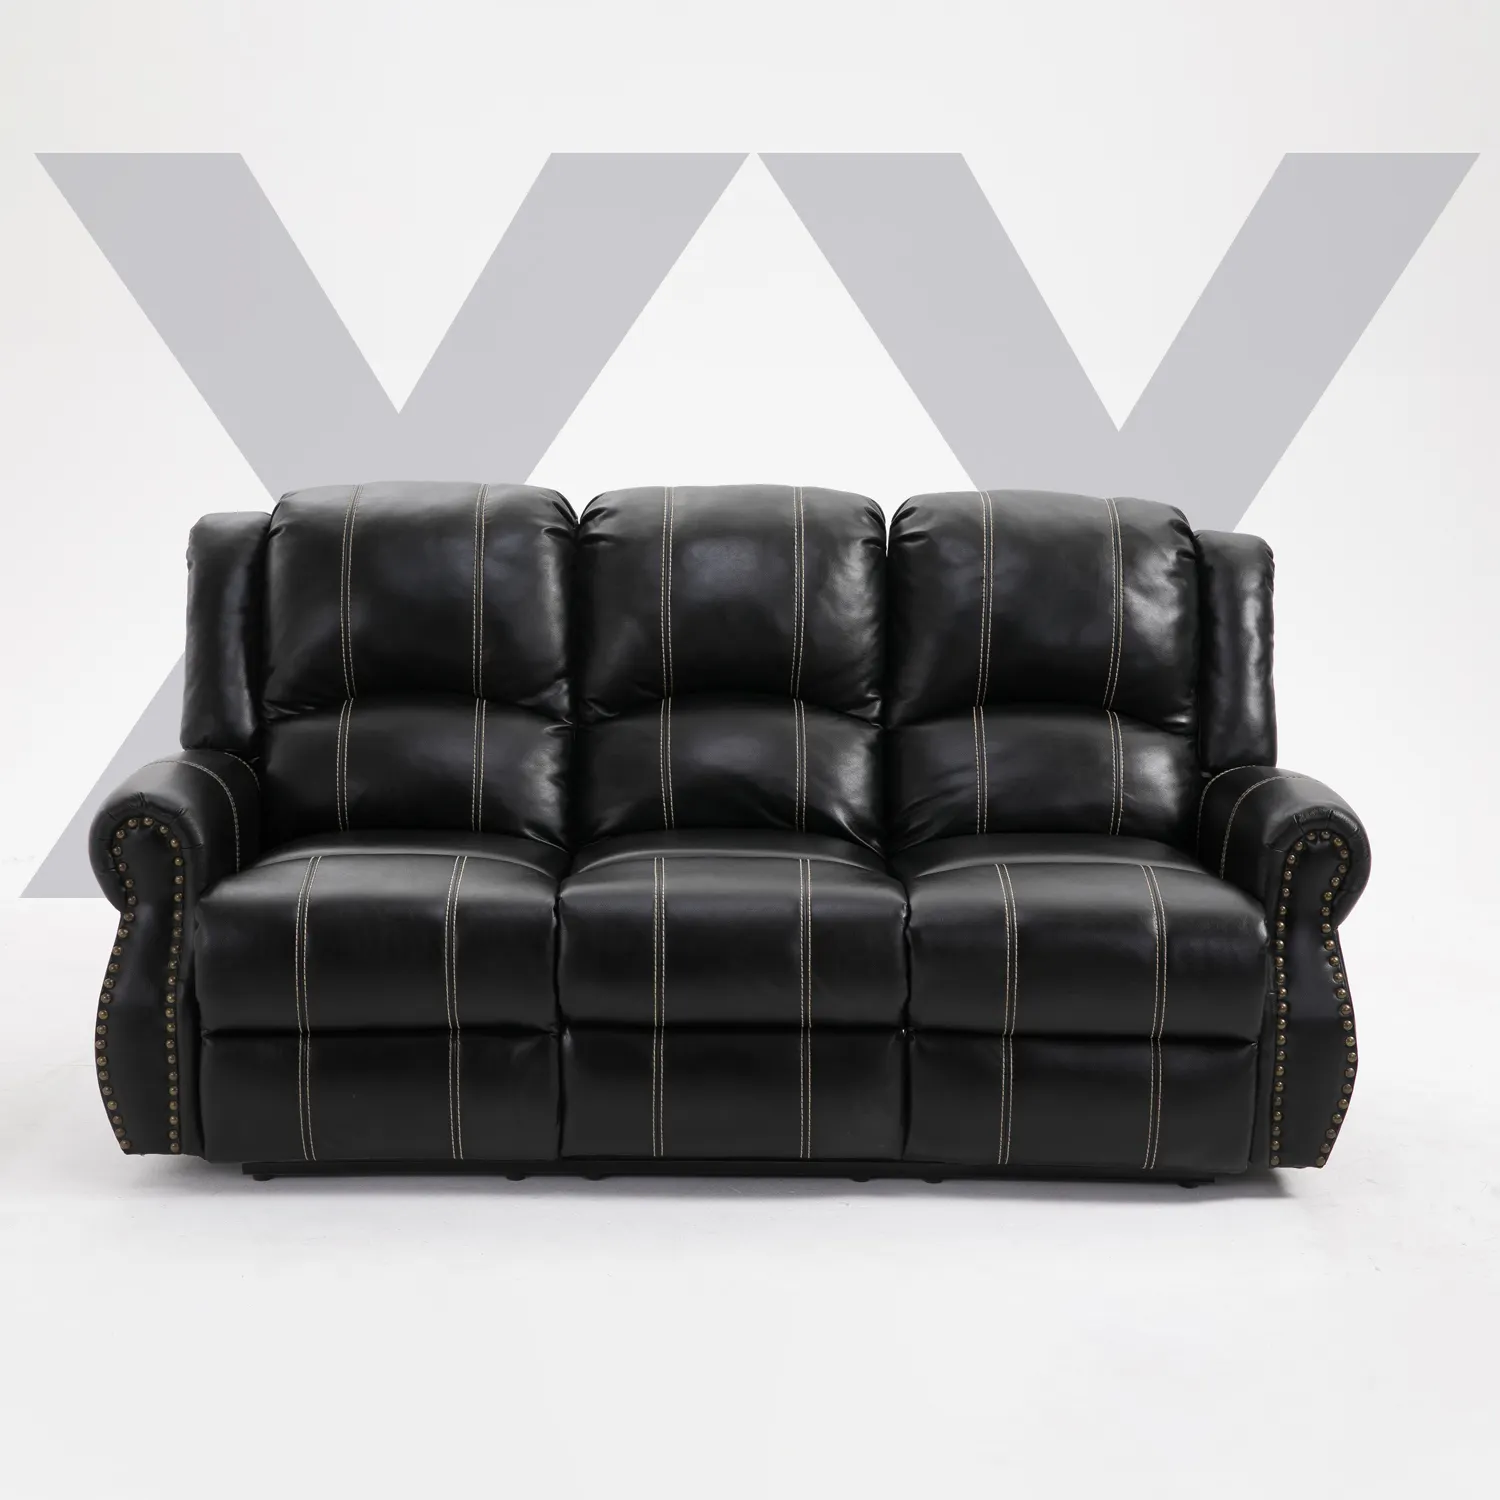 Hot Sales Modern Living Room PU Leather Manual Adjustable Sectional Recliner Sofa Set